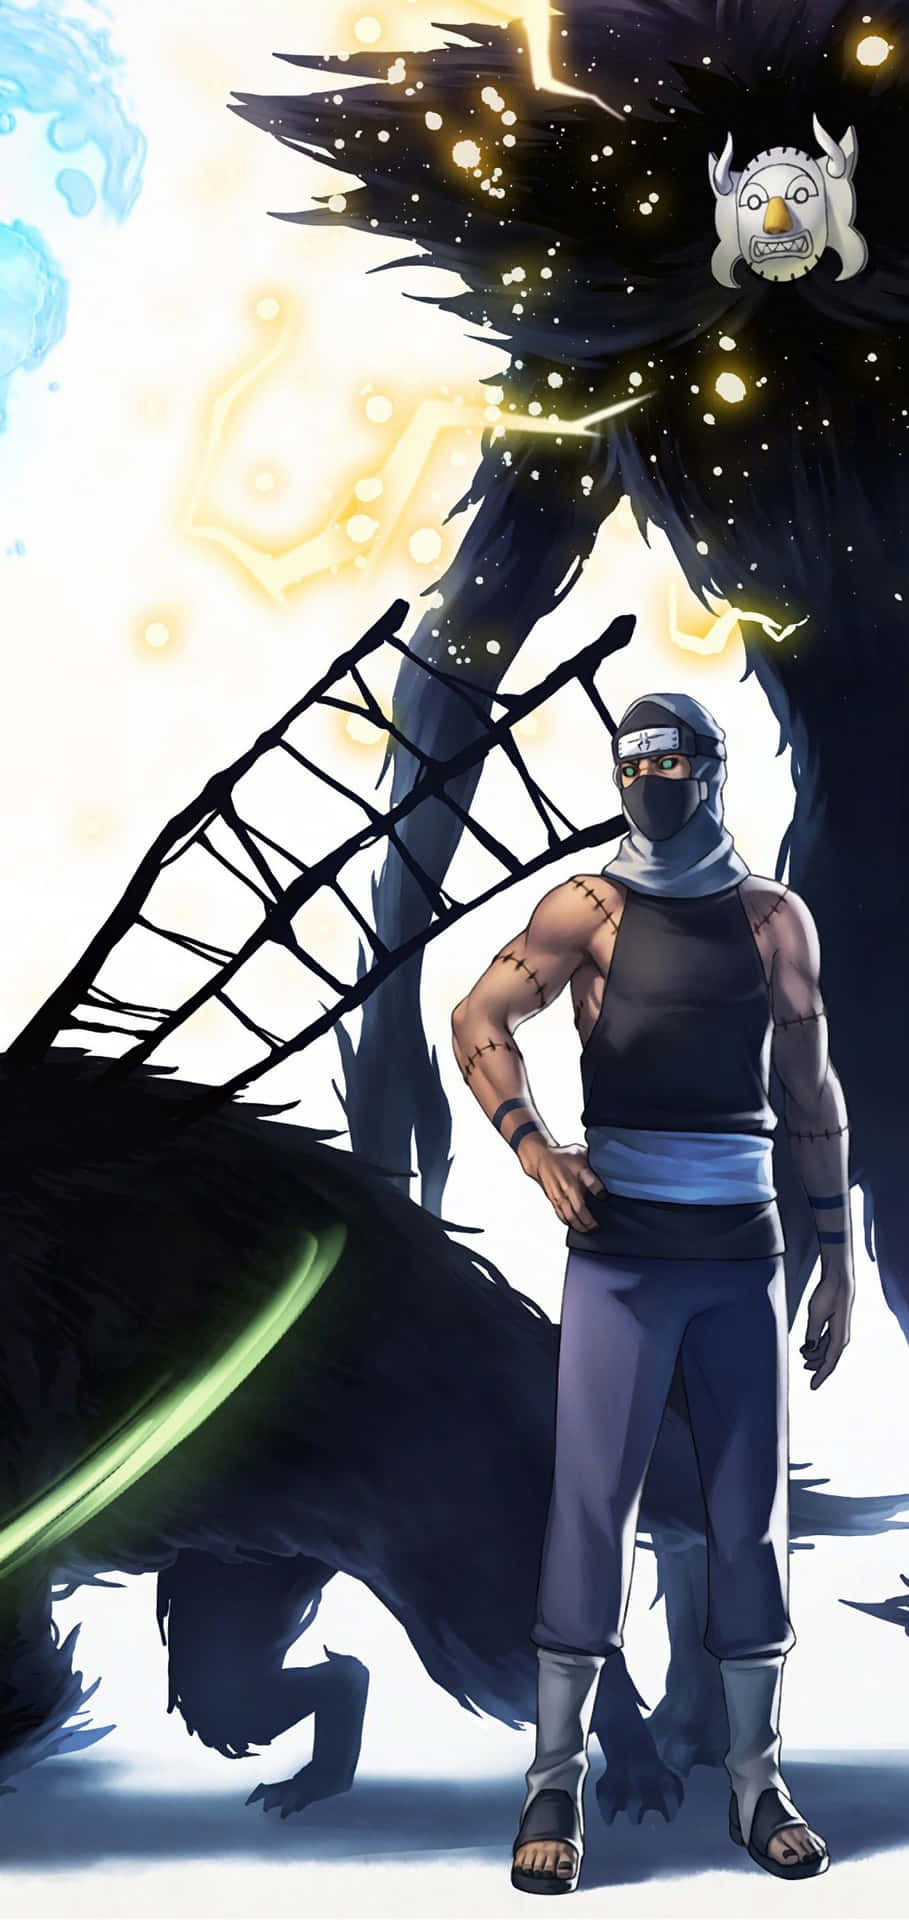 Kakuzu from Naruto Shippuden's Akatsuki organization standing fiercely against a dark background. Wallpaper